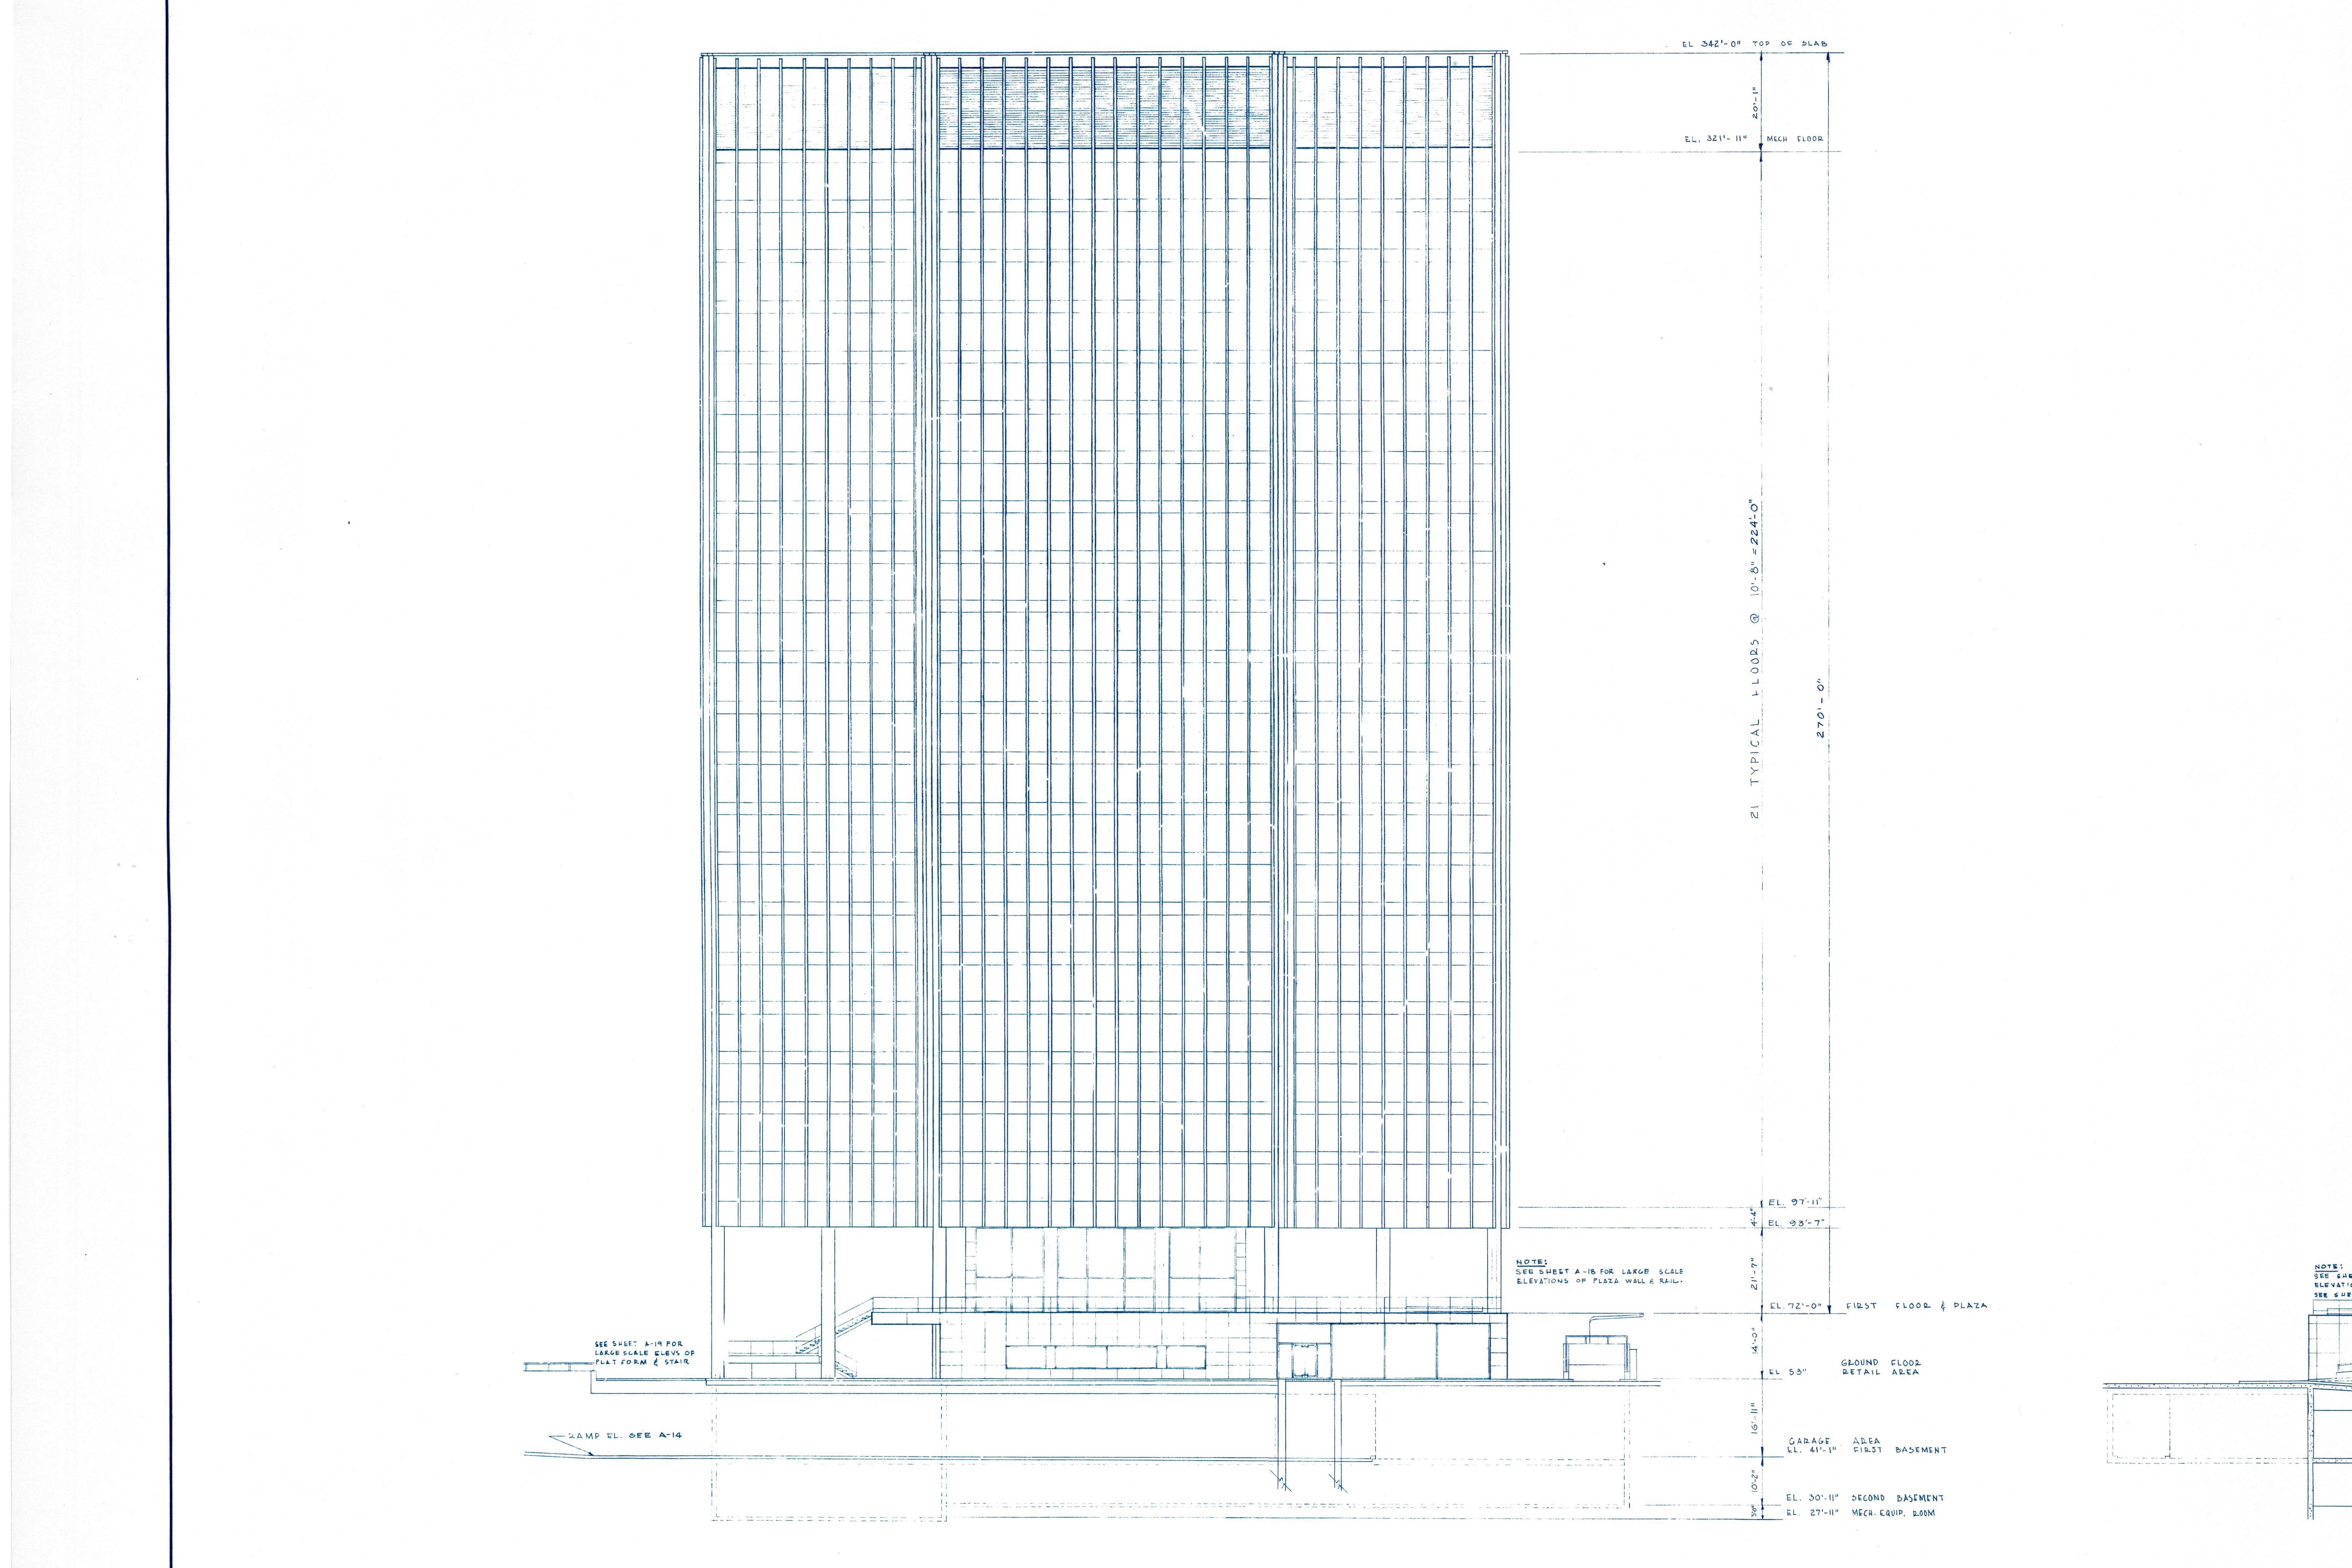 Bauhaus Mies van der Rohe Blueprint, One Charles Center, Baltimore 1961, Elevations 